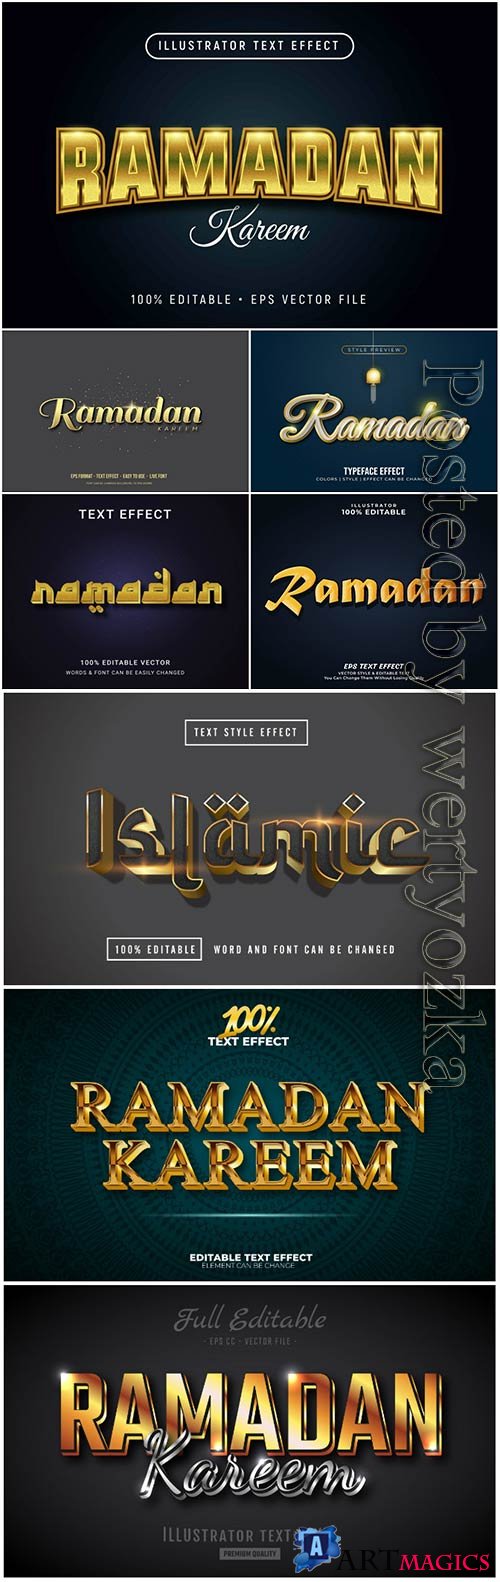 Ramadan vector text effect